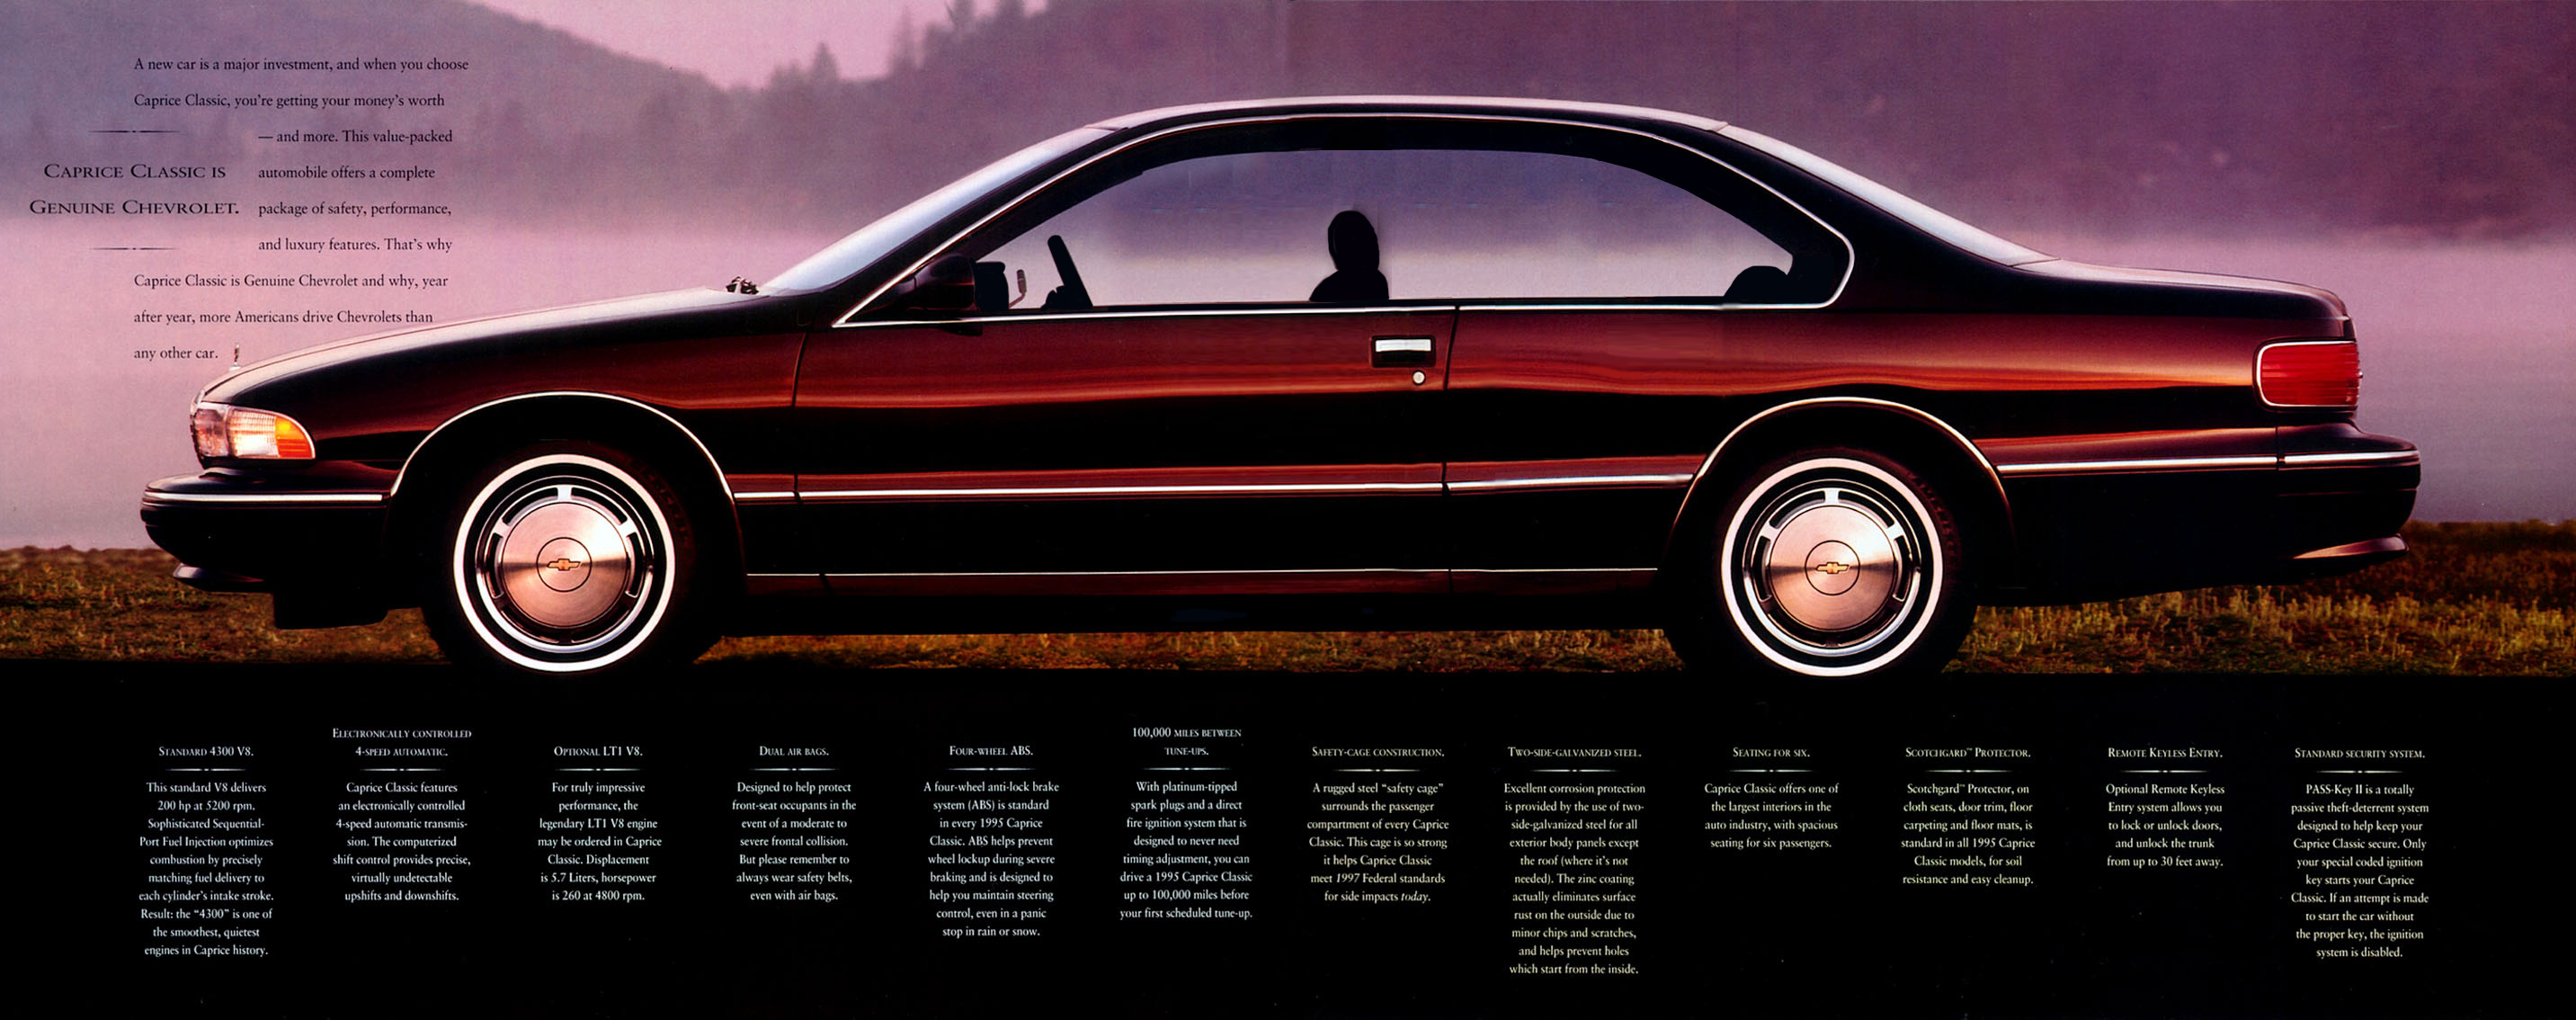 1996-Caprice-Hardtop-Coupe.jpg